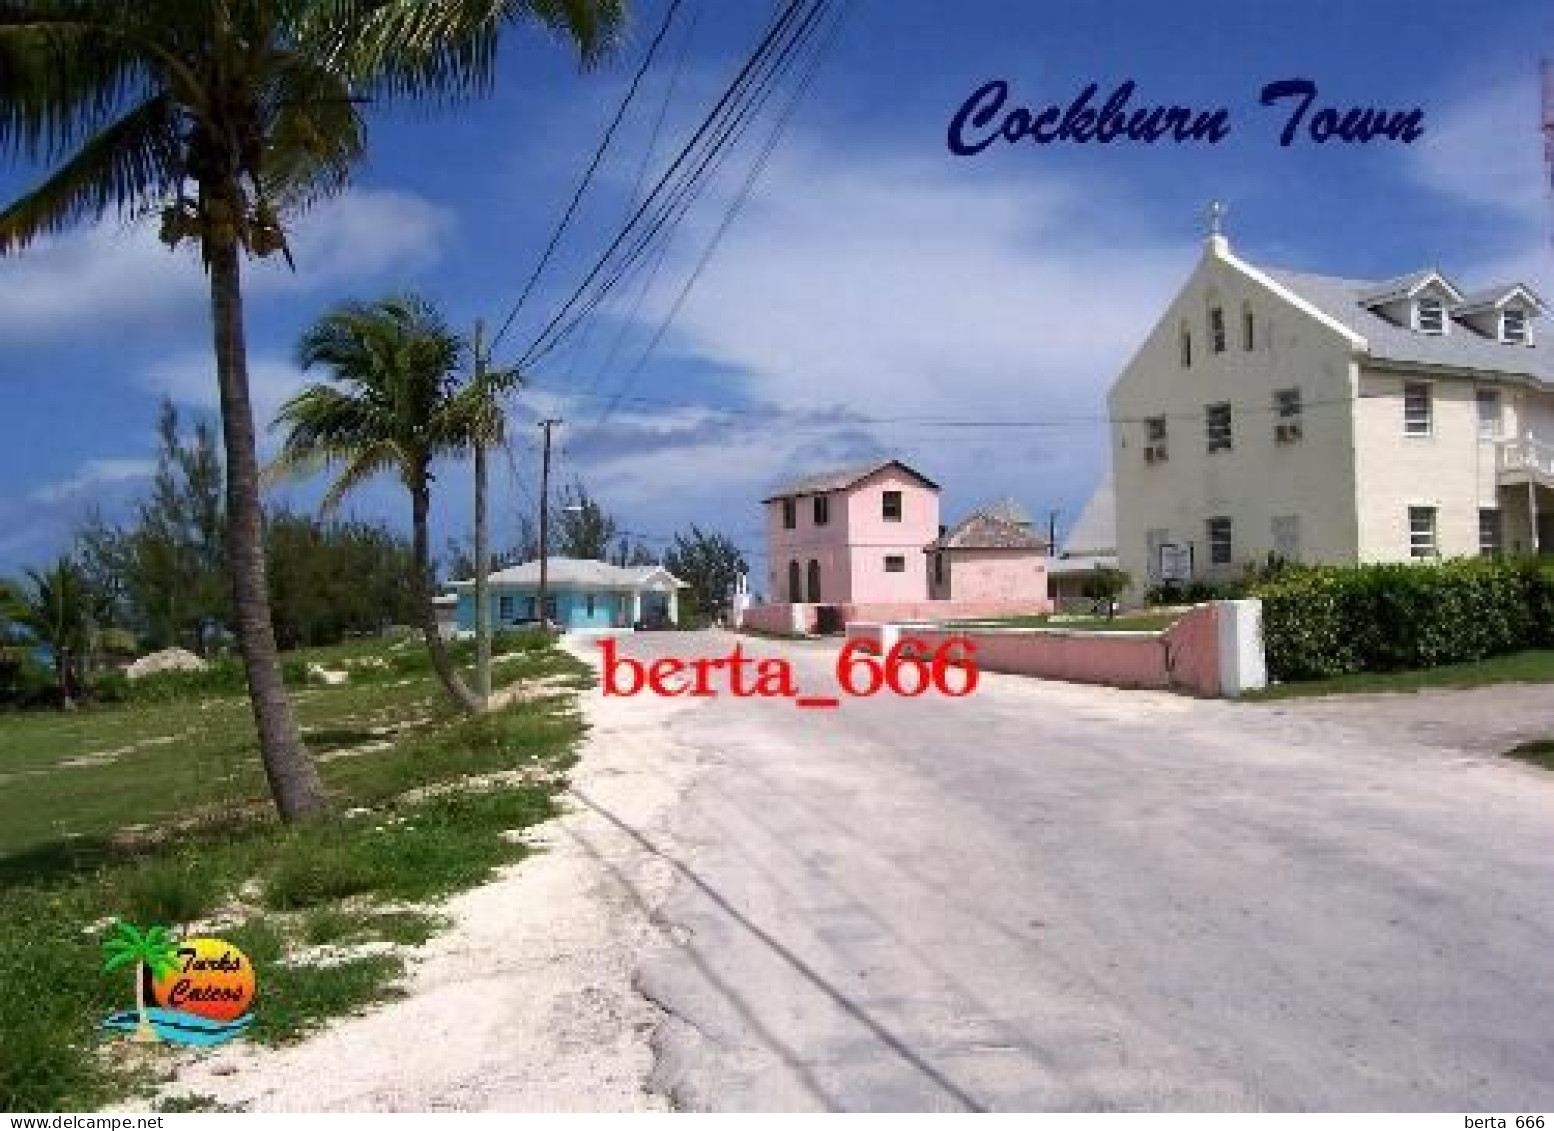 Turks And Caicos Grand Turk Cockburn Town Street View New Postcard - Turk & Caicos Islands